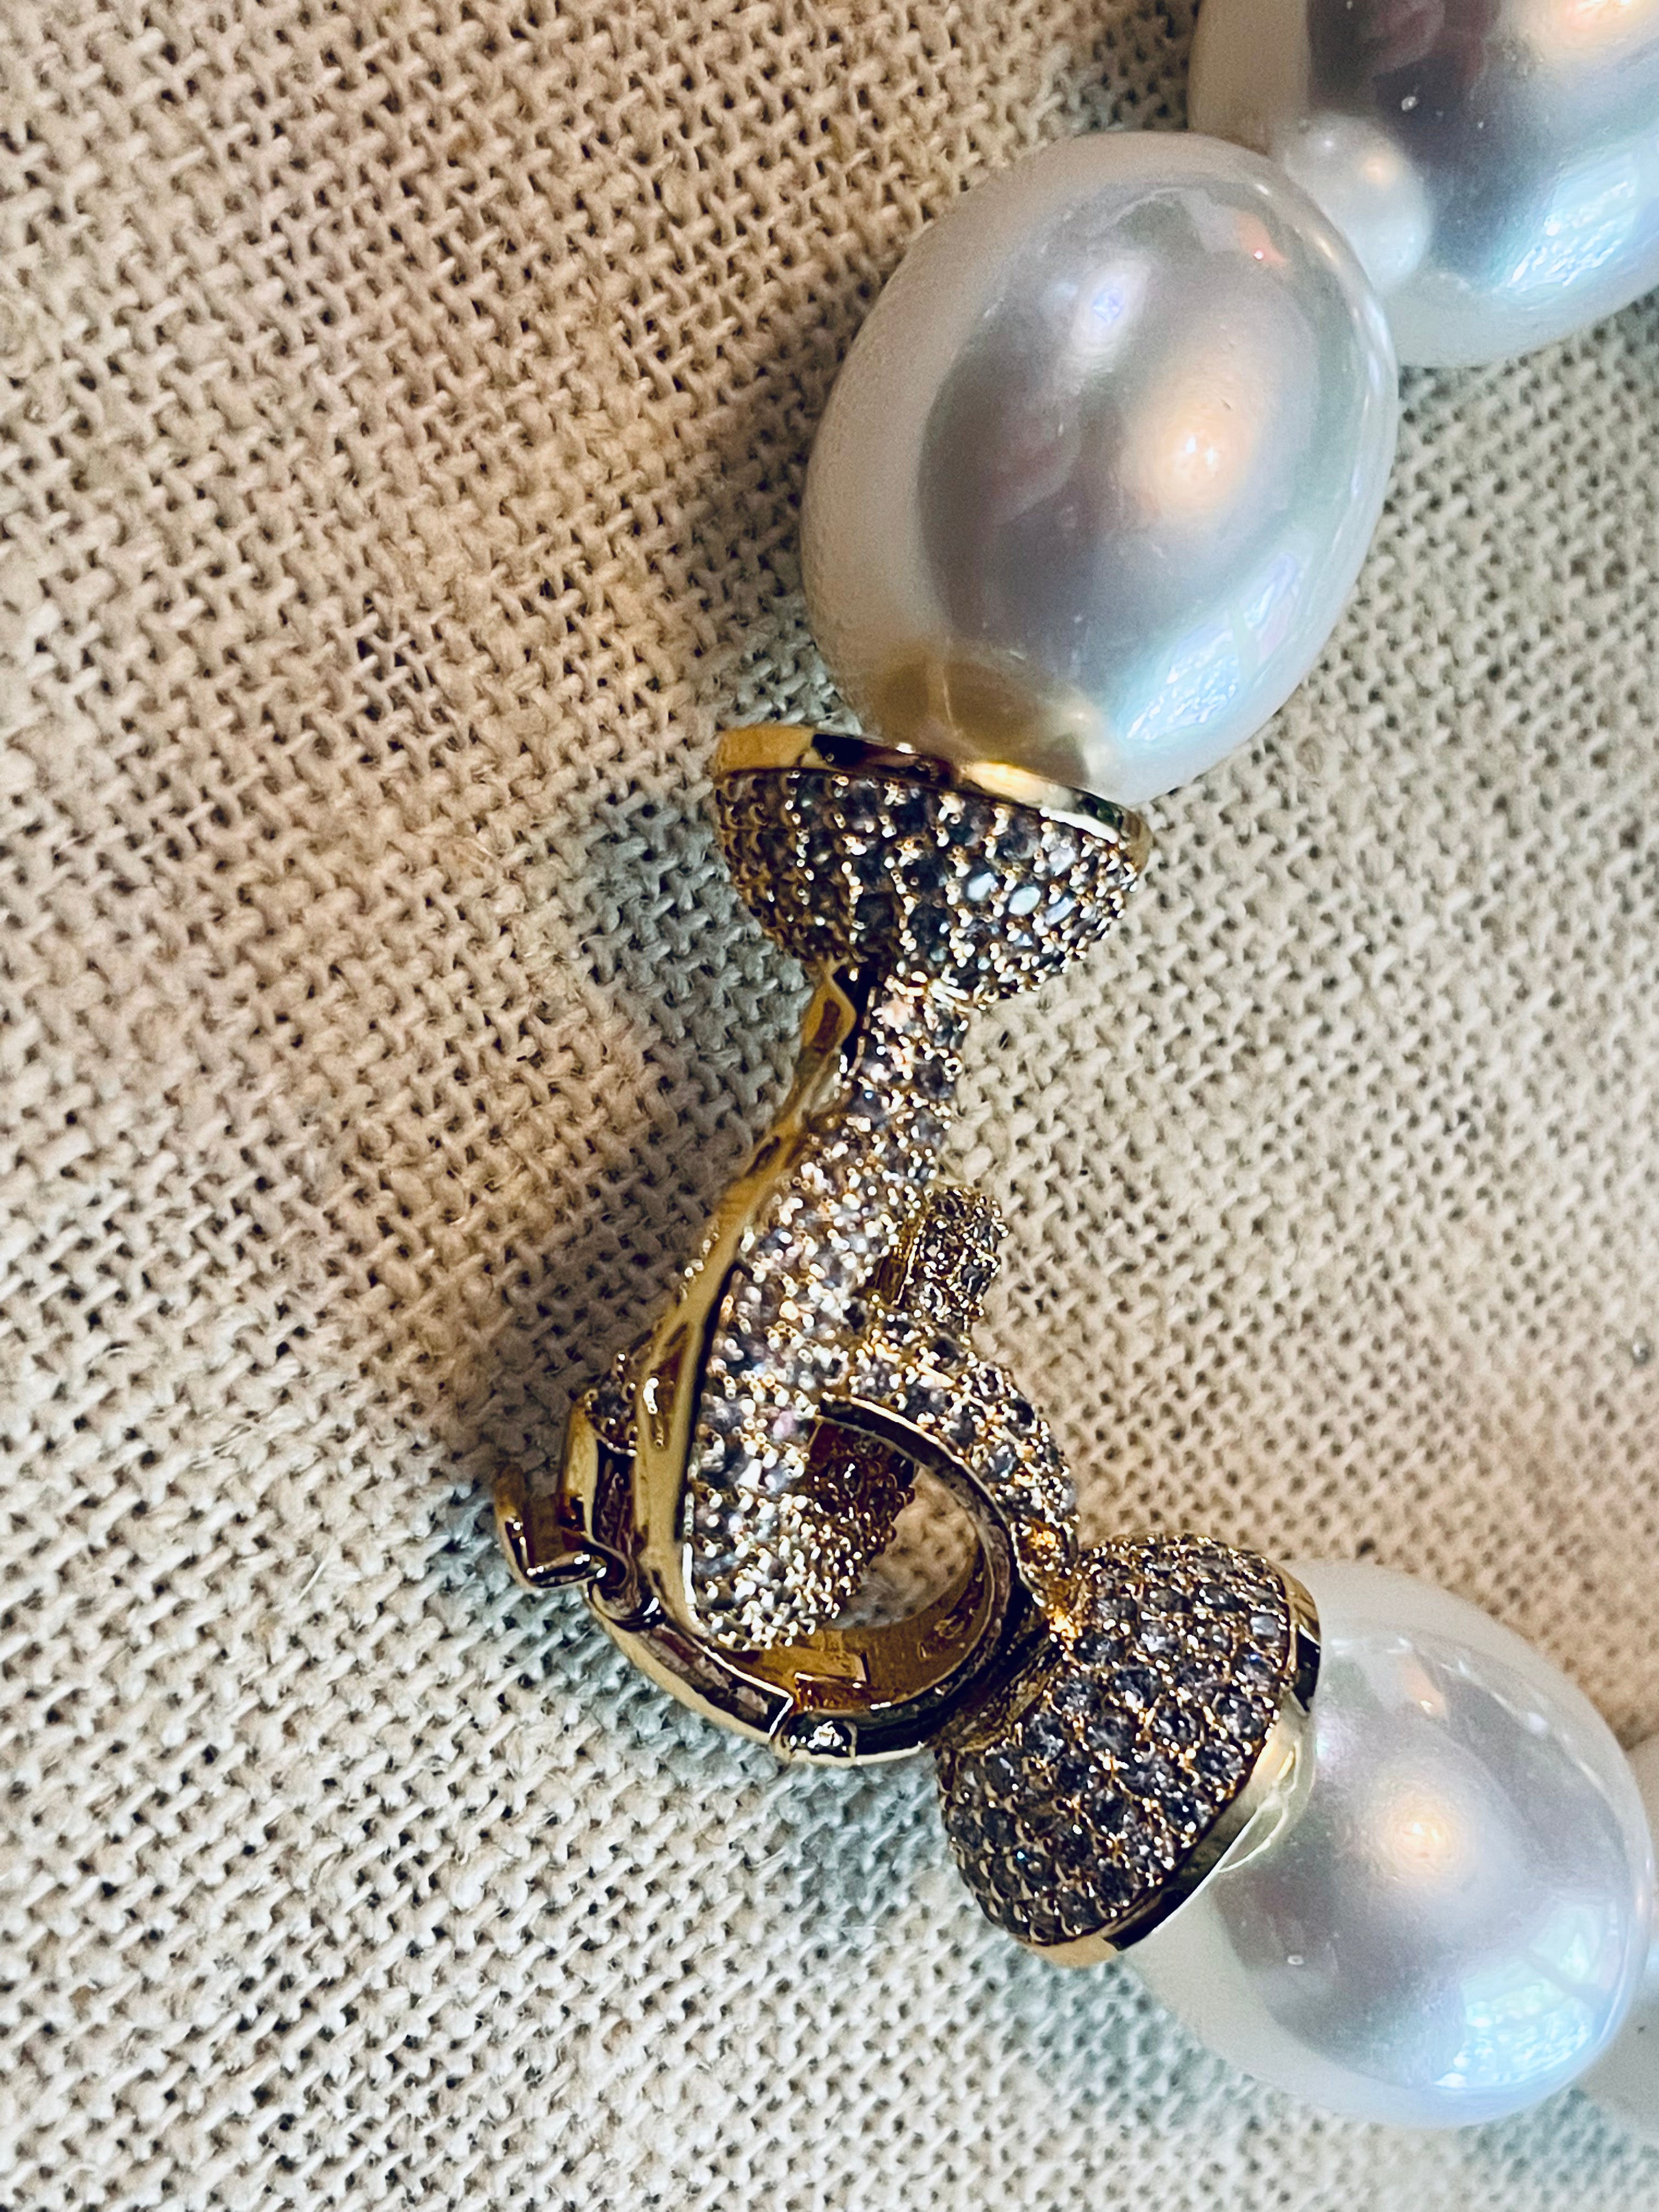 Egg pearls South sea shell pearl bracelet